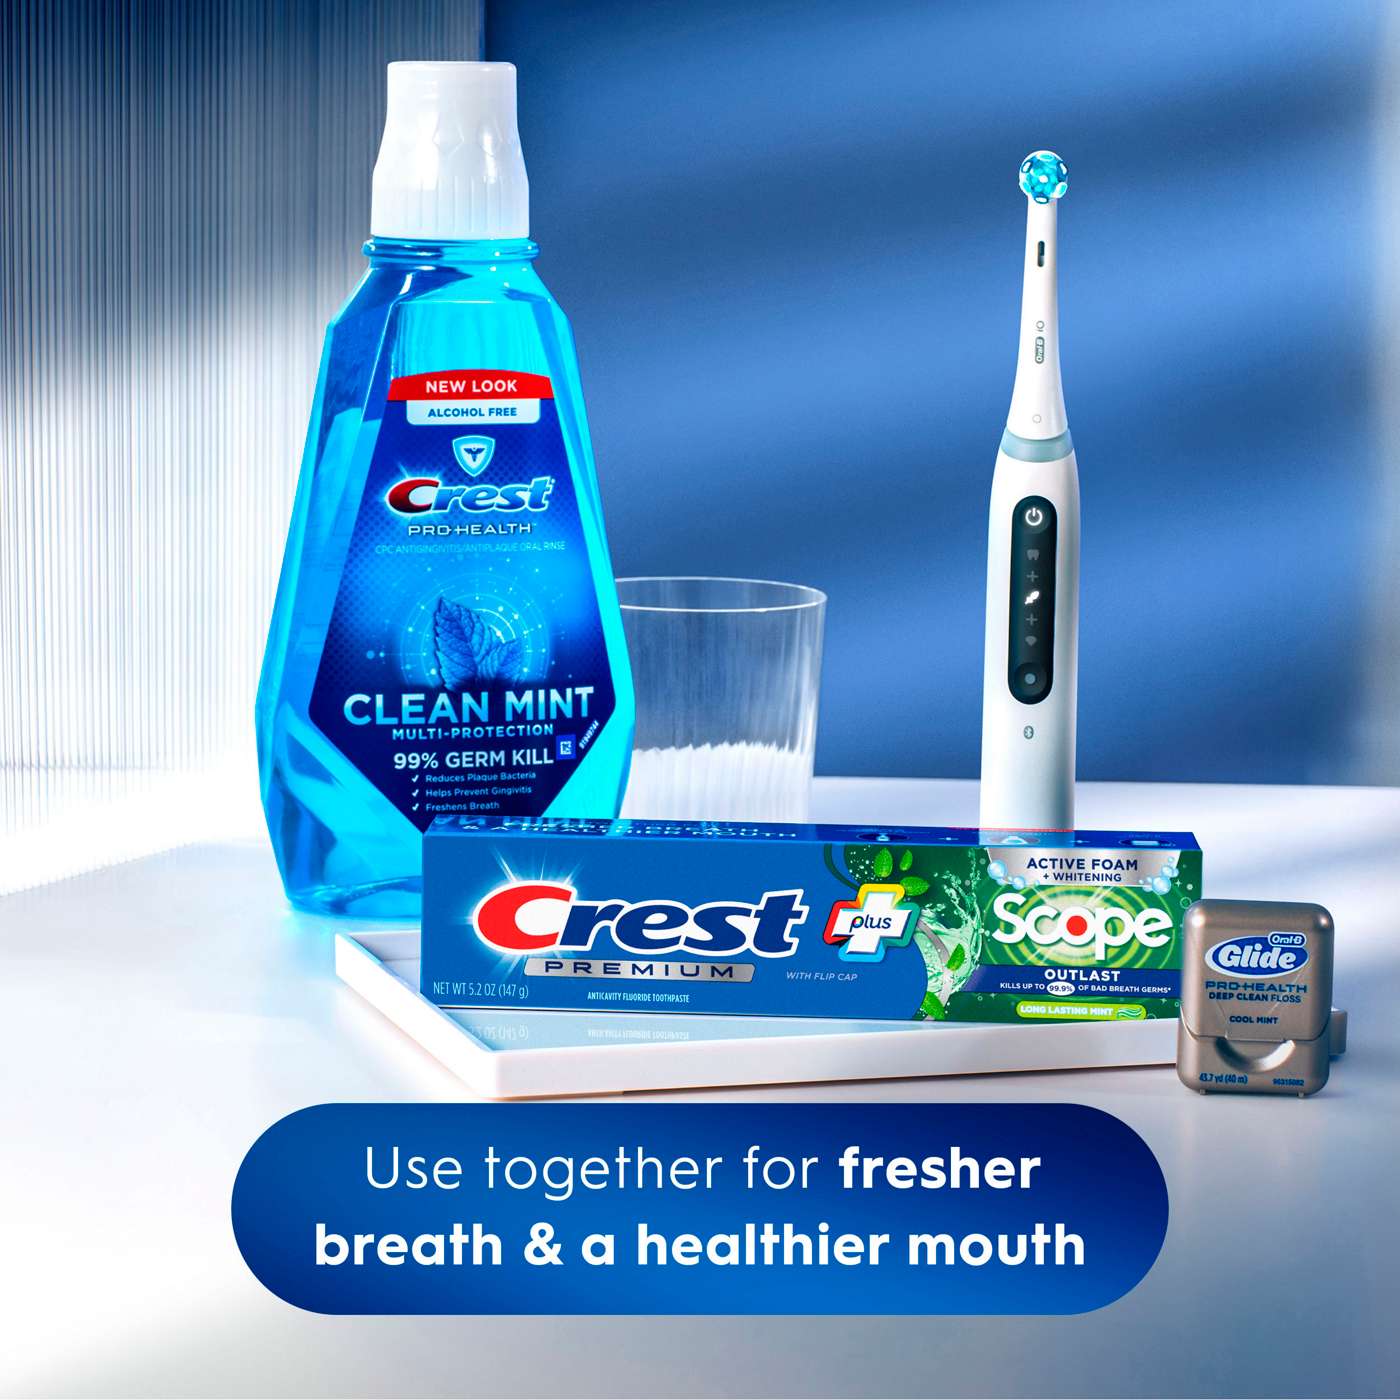 Crest Premium + Scope Outlast Active Foam Toothpaste - Long Lasting Mint; image 7 of 8